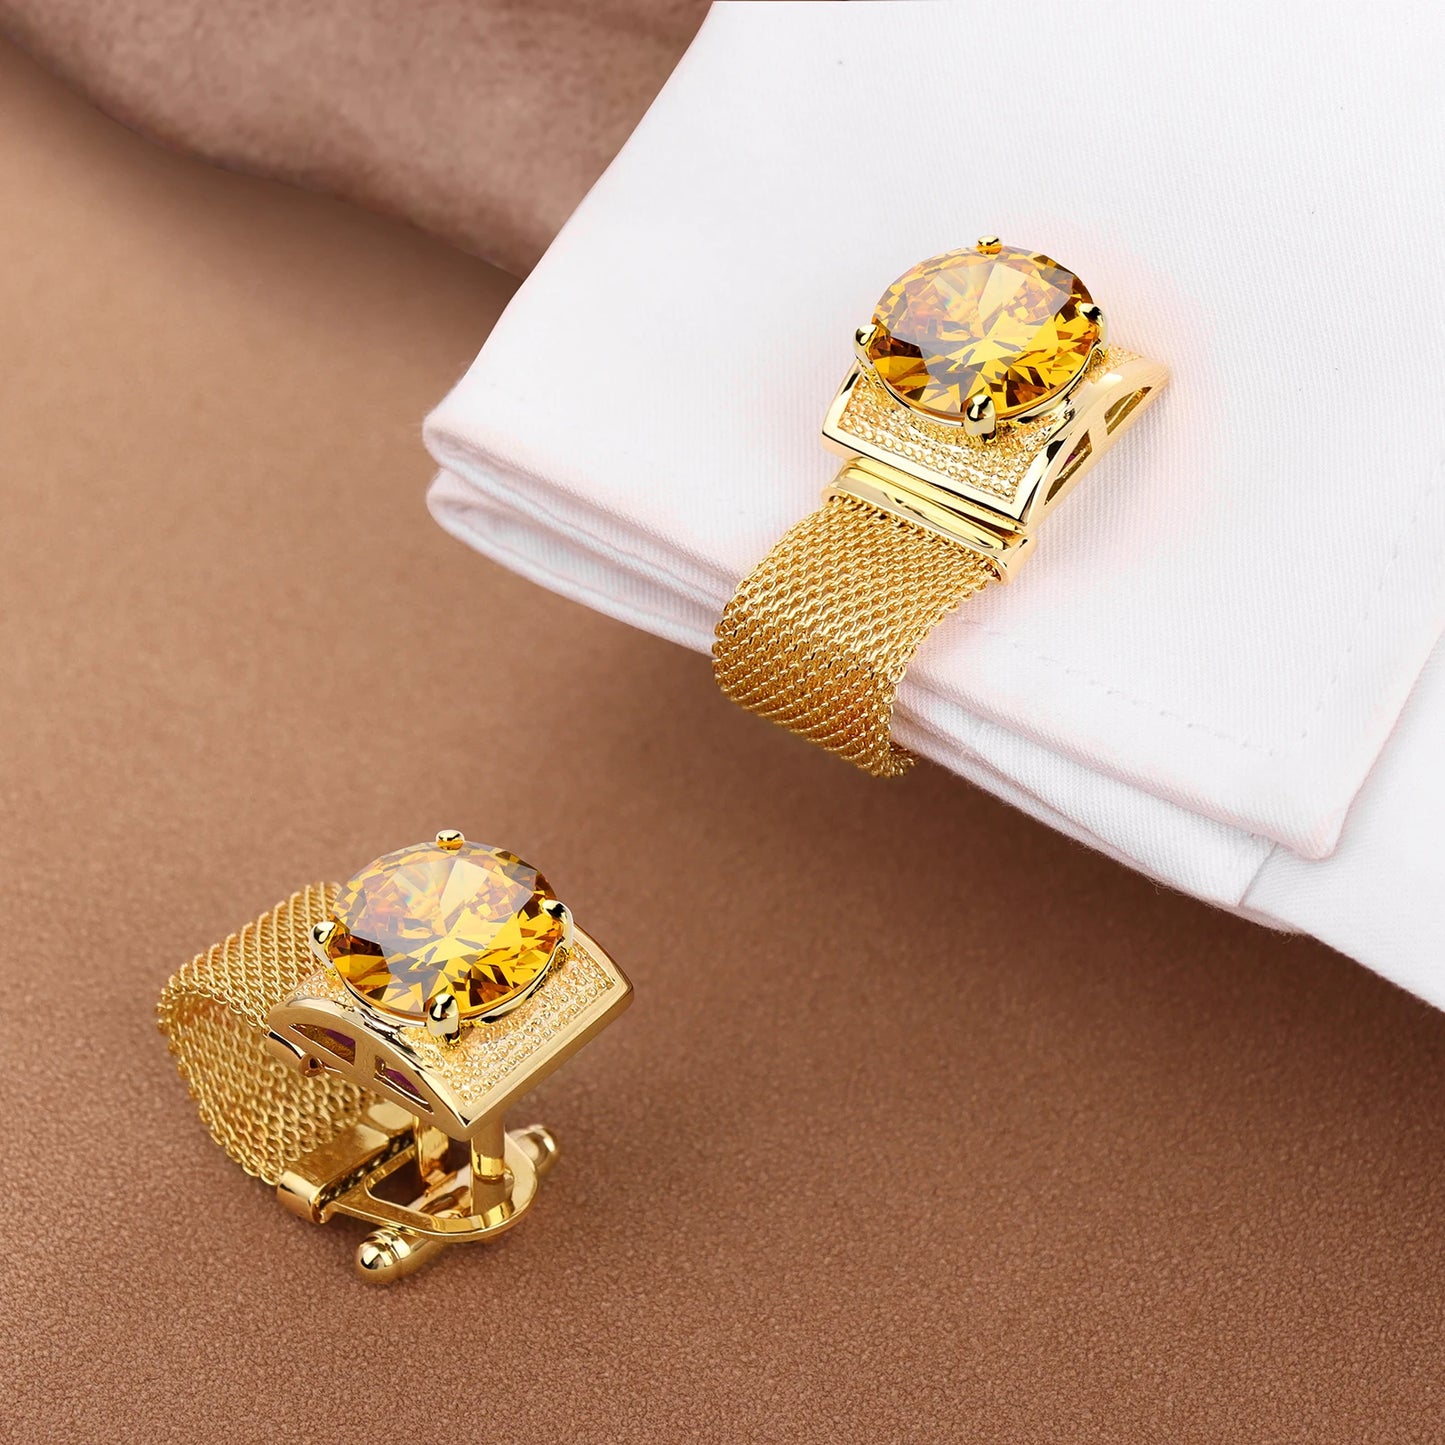 HAWSON Mens Crystal Cufflinks with Chain-luxury Shiny French Shirt Cufflinks wedding business gift accessories, Birthstone cuff